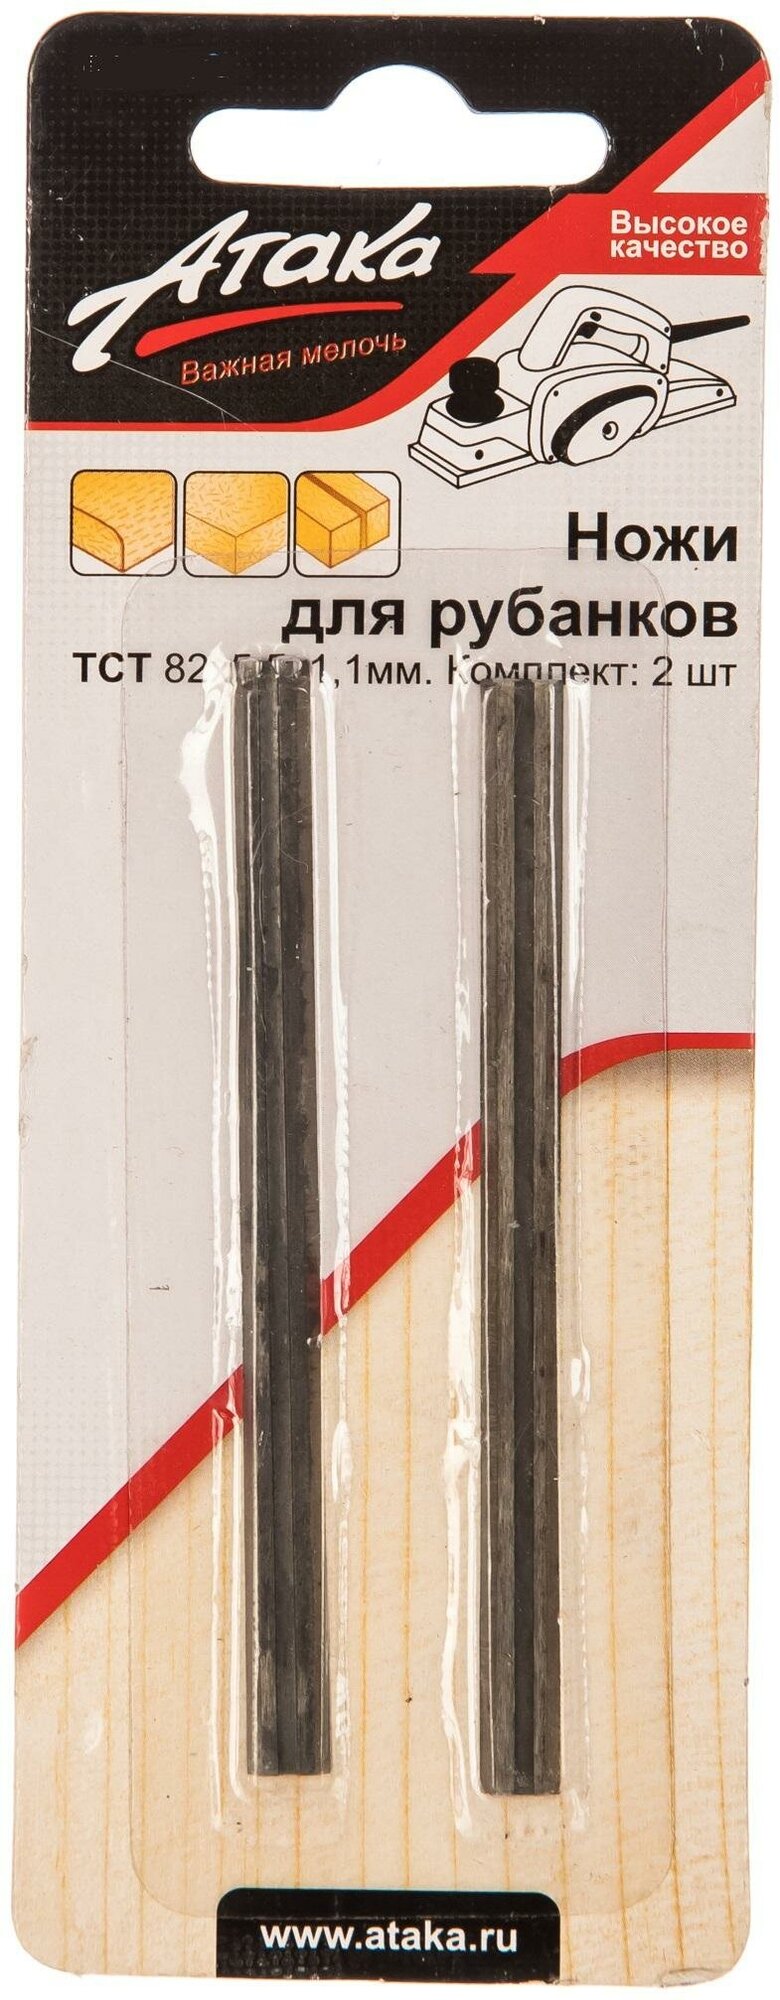 Односторонние ножи для рубанков АТАКА - фото №4